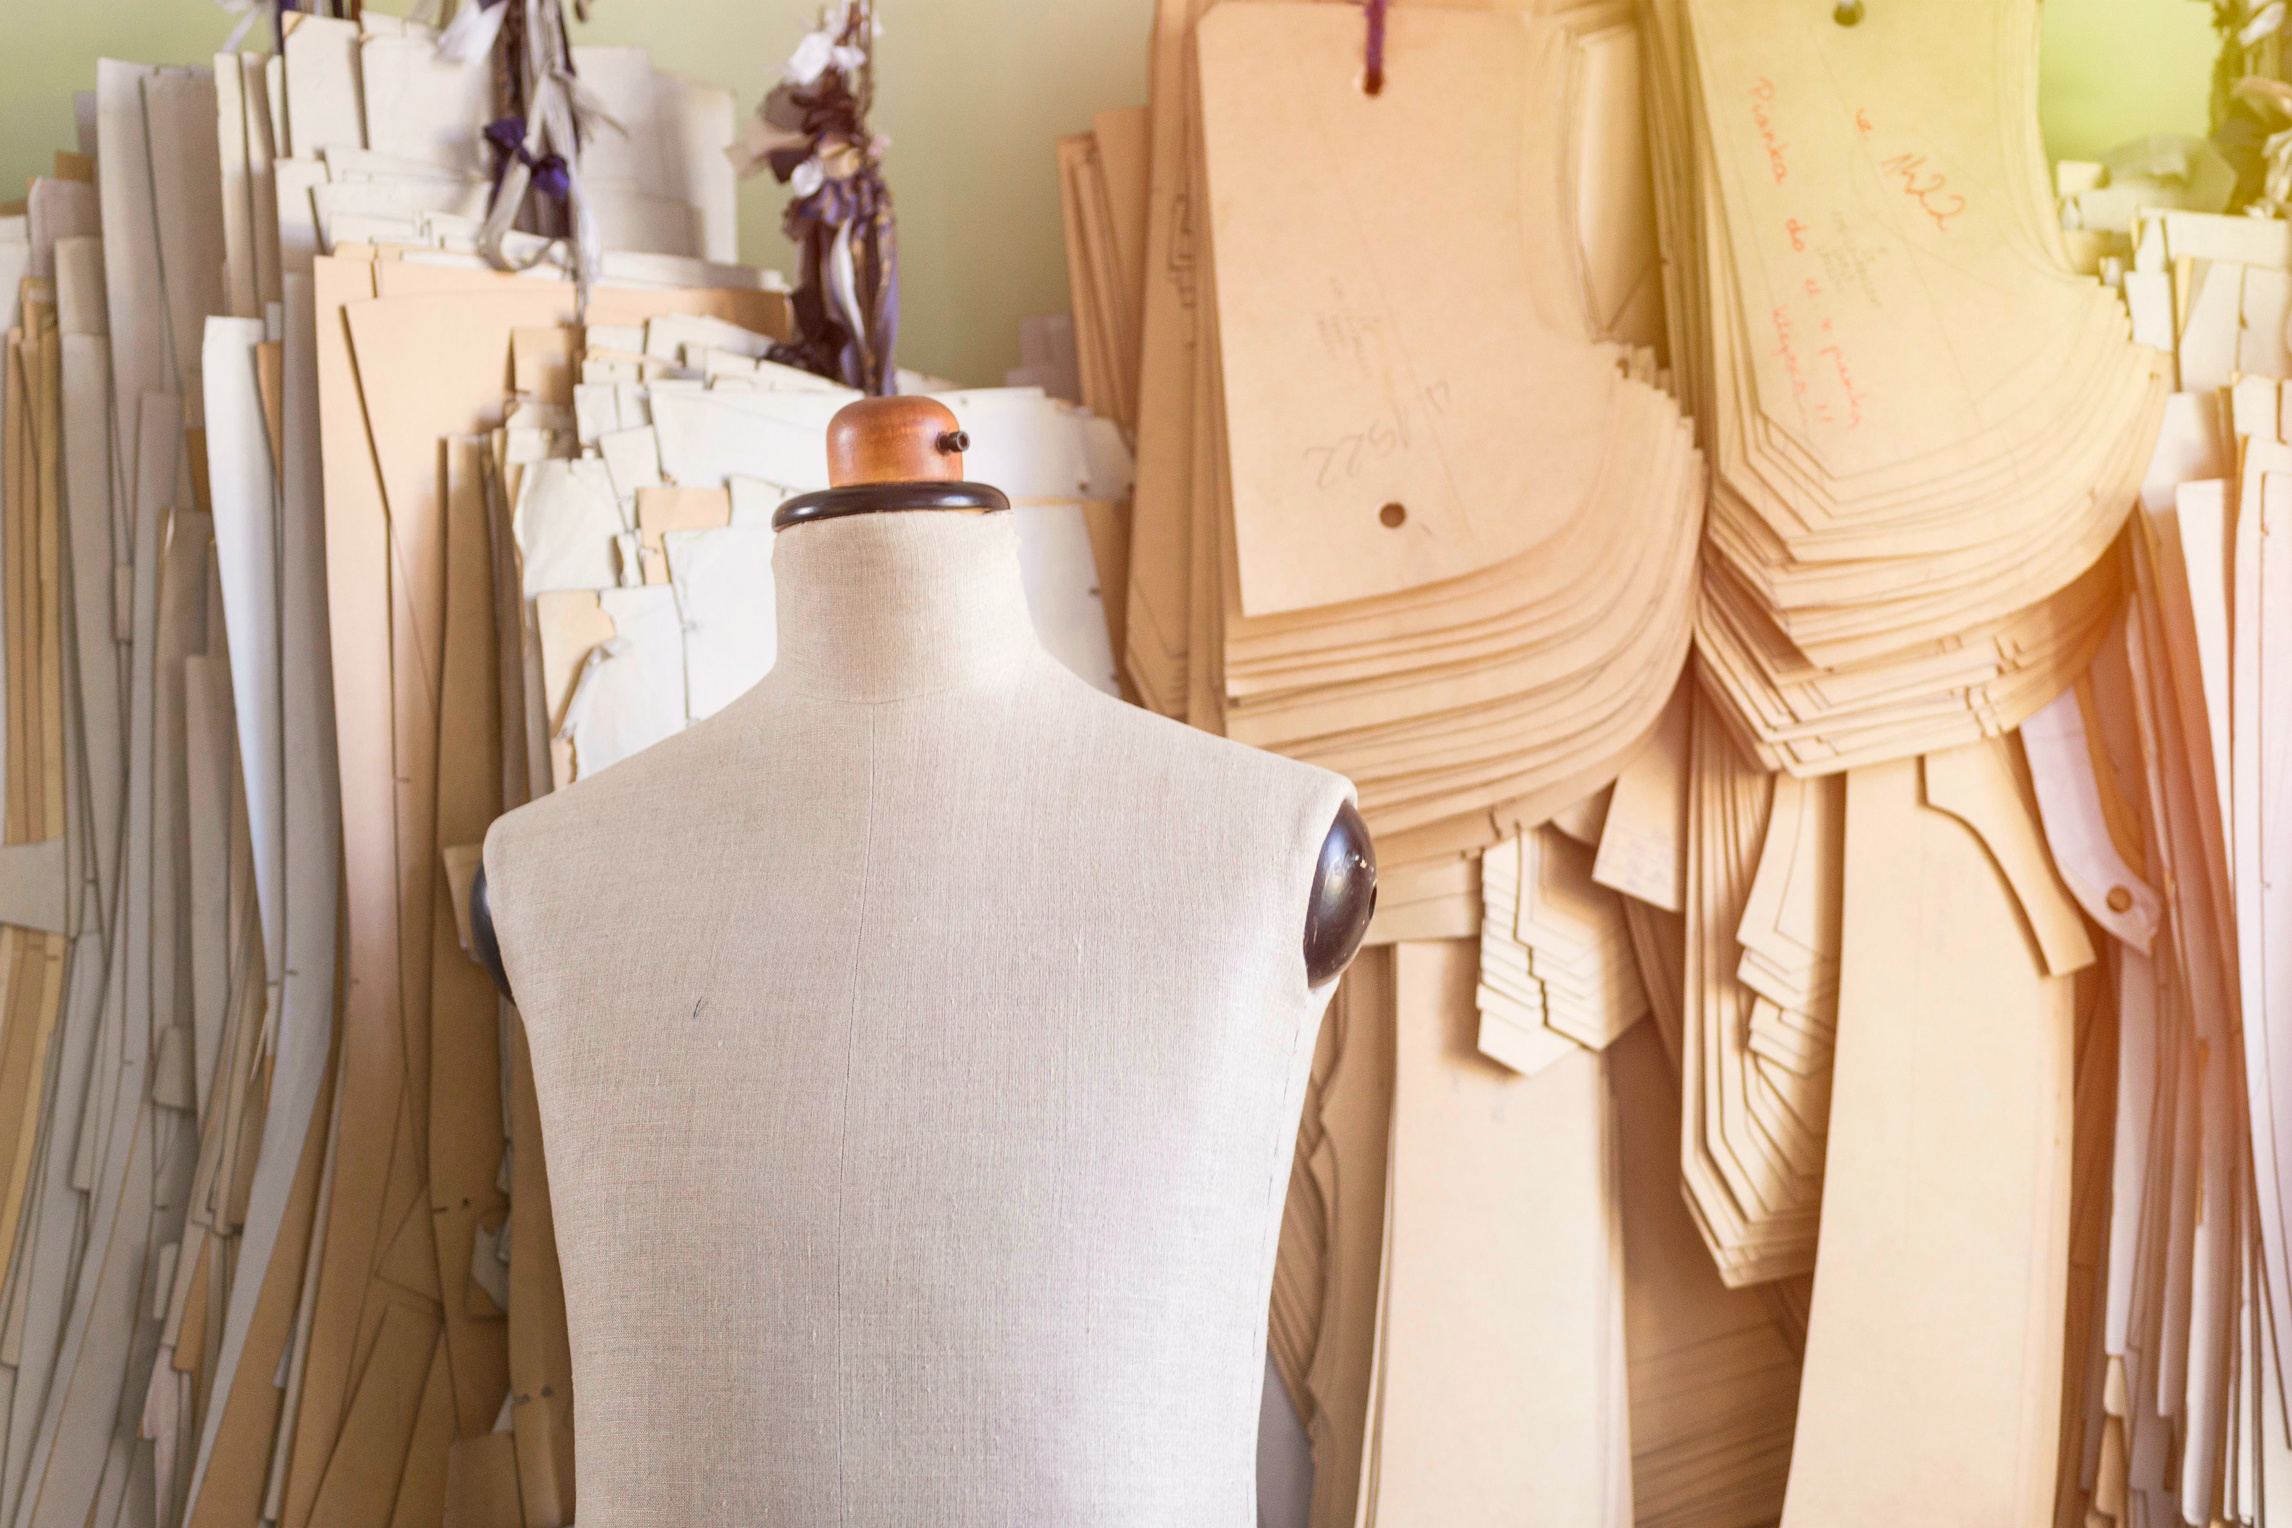 Mannequin in Bespoke Tailor Studio against Cardboard Sewing Pattern